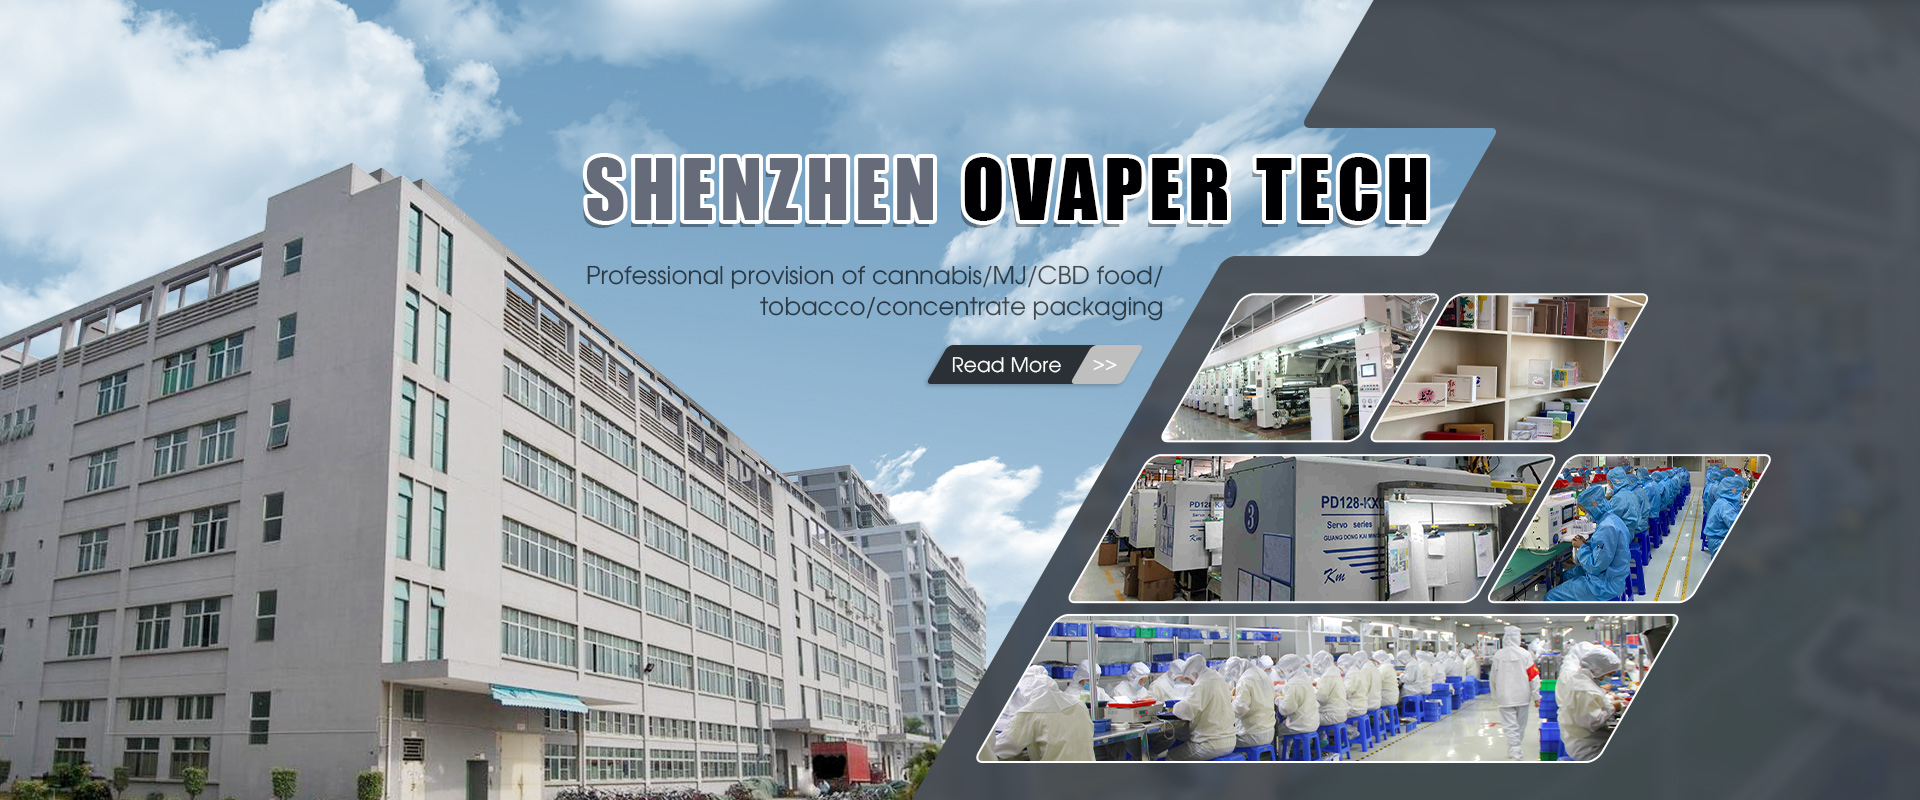 About Ovaper Tech